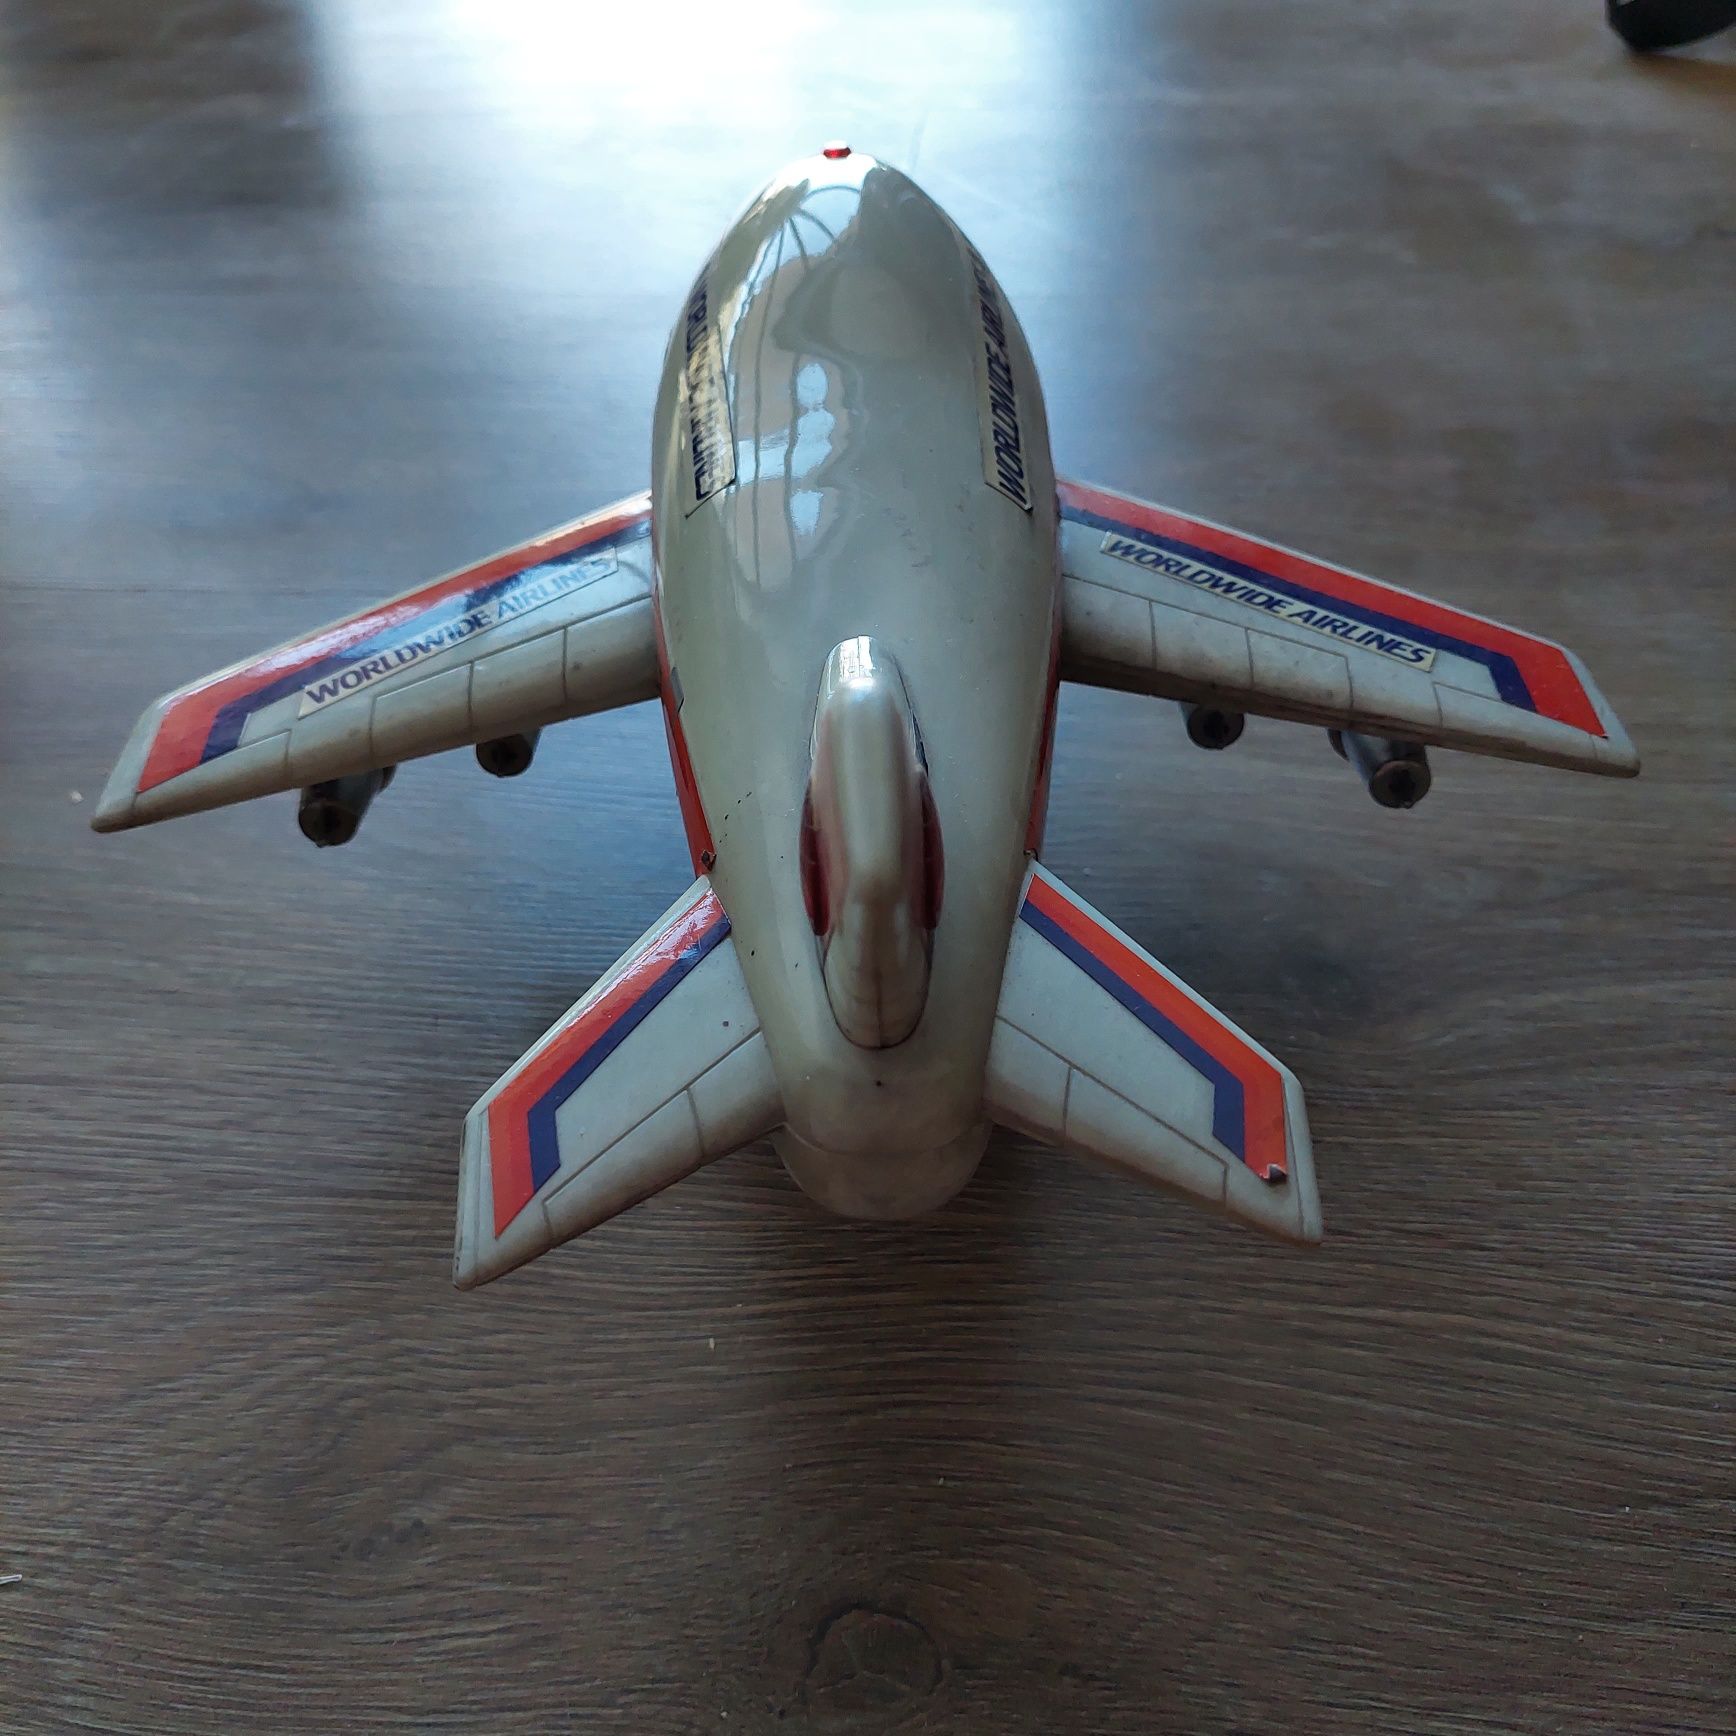 Samolot zabawkowy, lata 90-te.